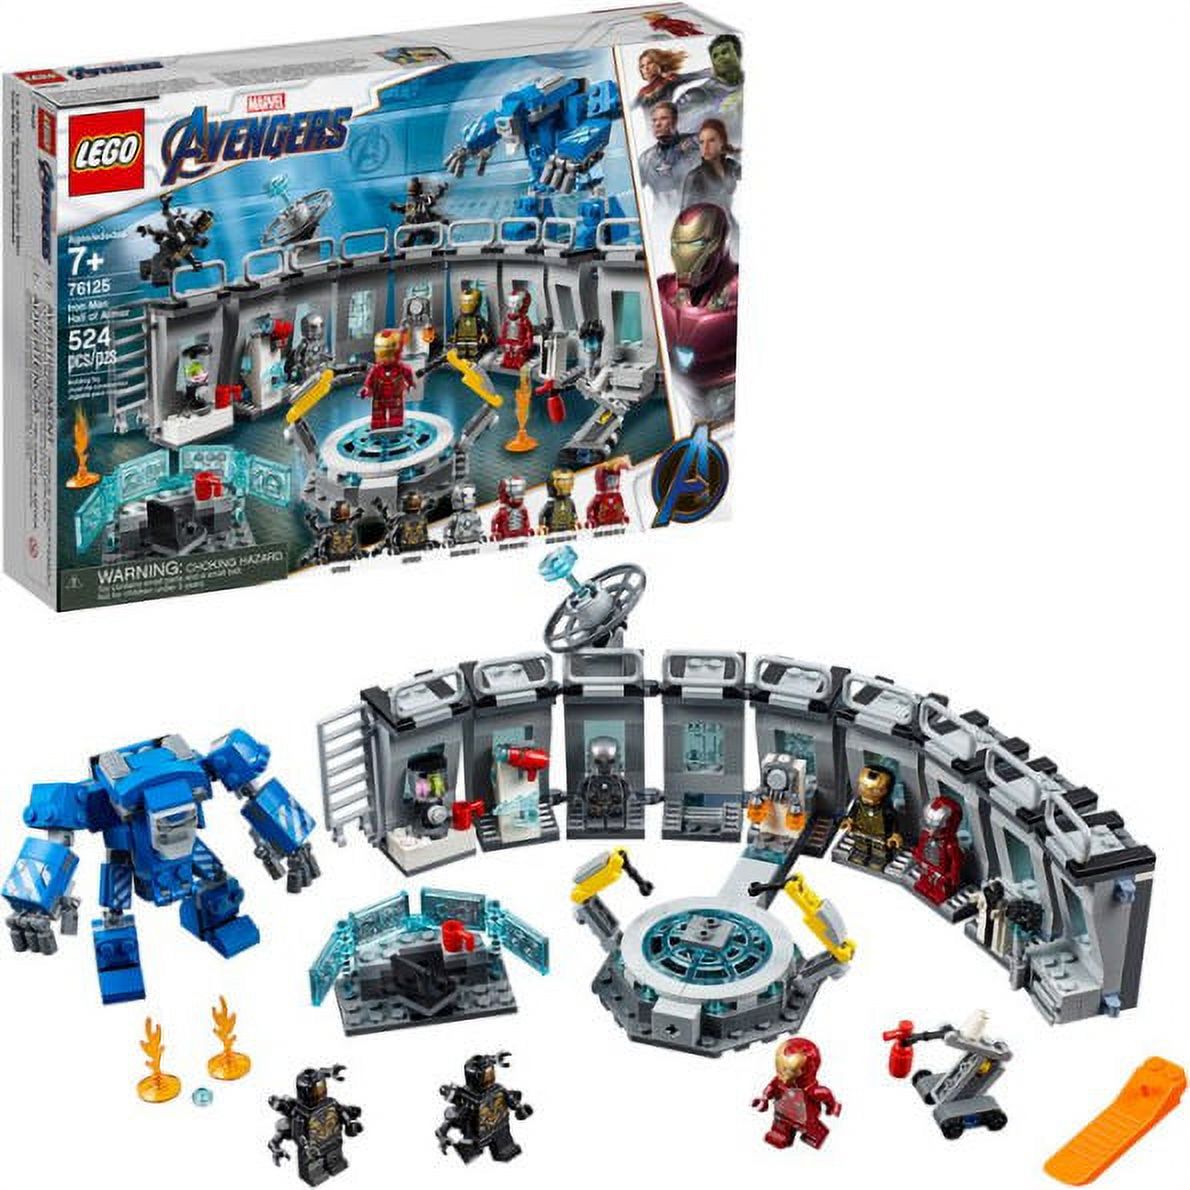 LEGO Marvel Avengers Iron Man Hall of Armor 76125 Building Kit - Tony Stark Action Figure - image 1 of 6